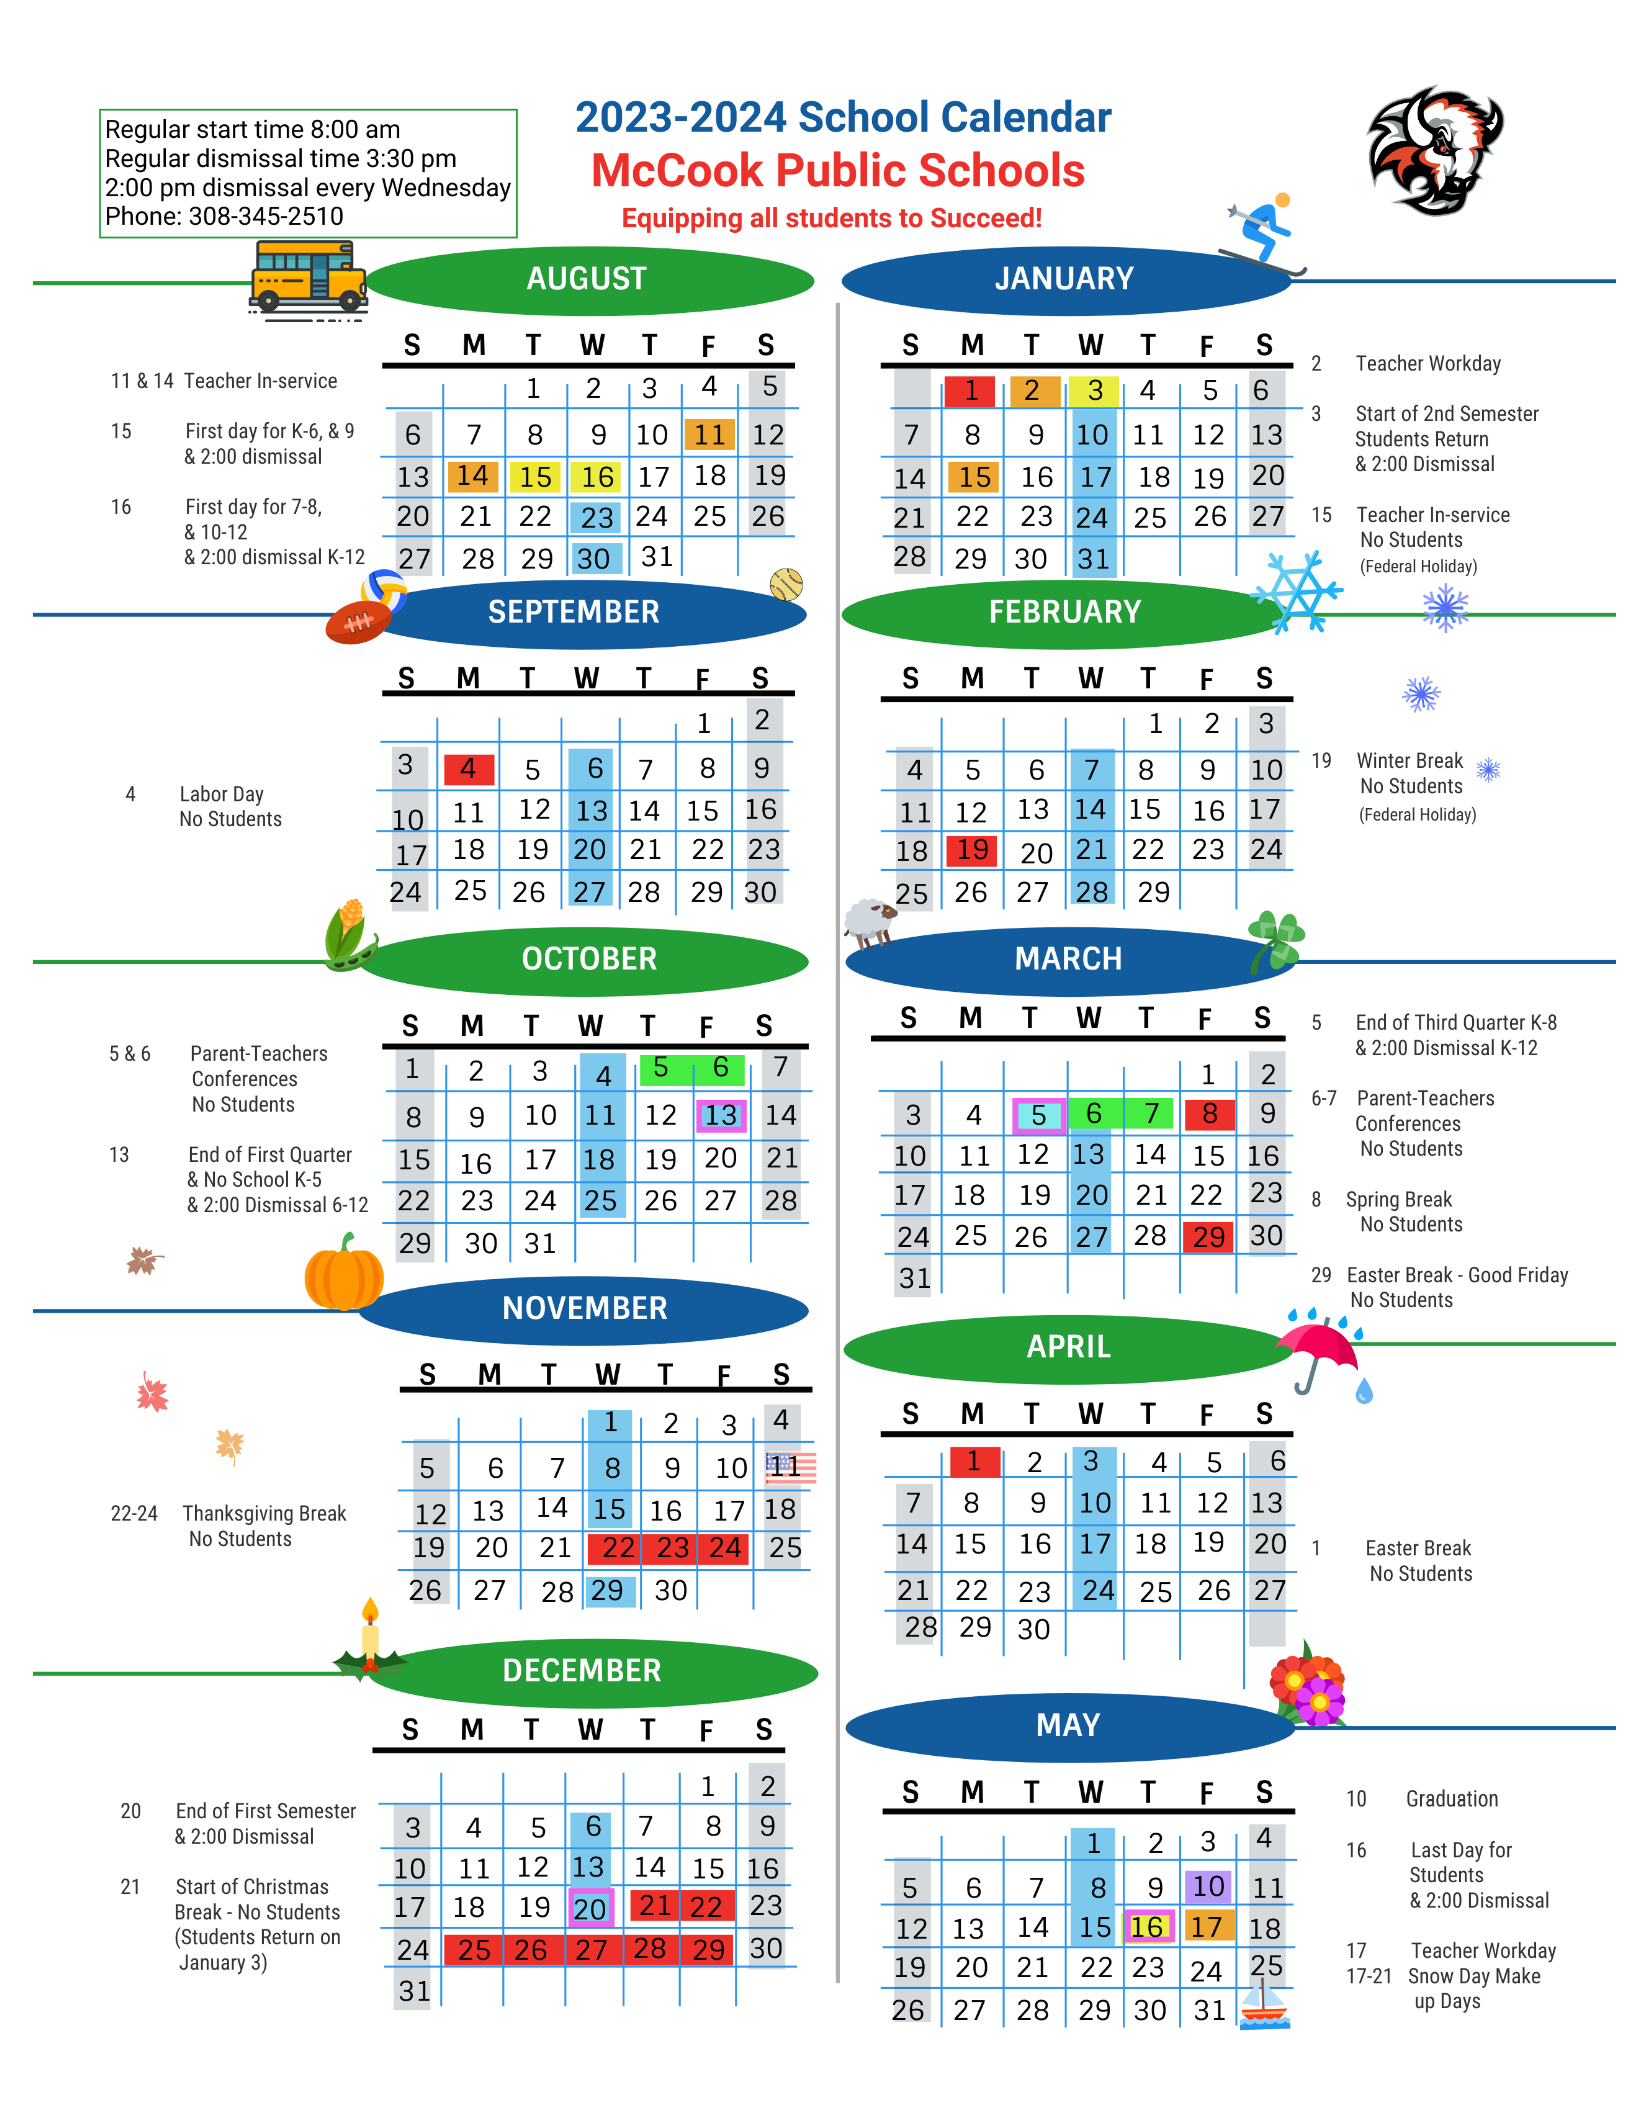 school-calendar